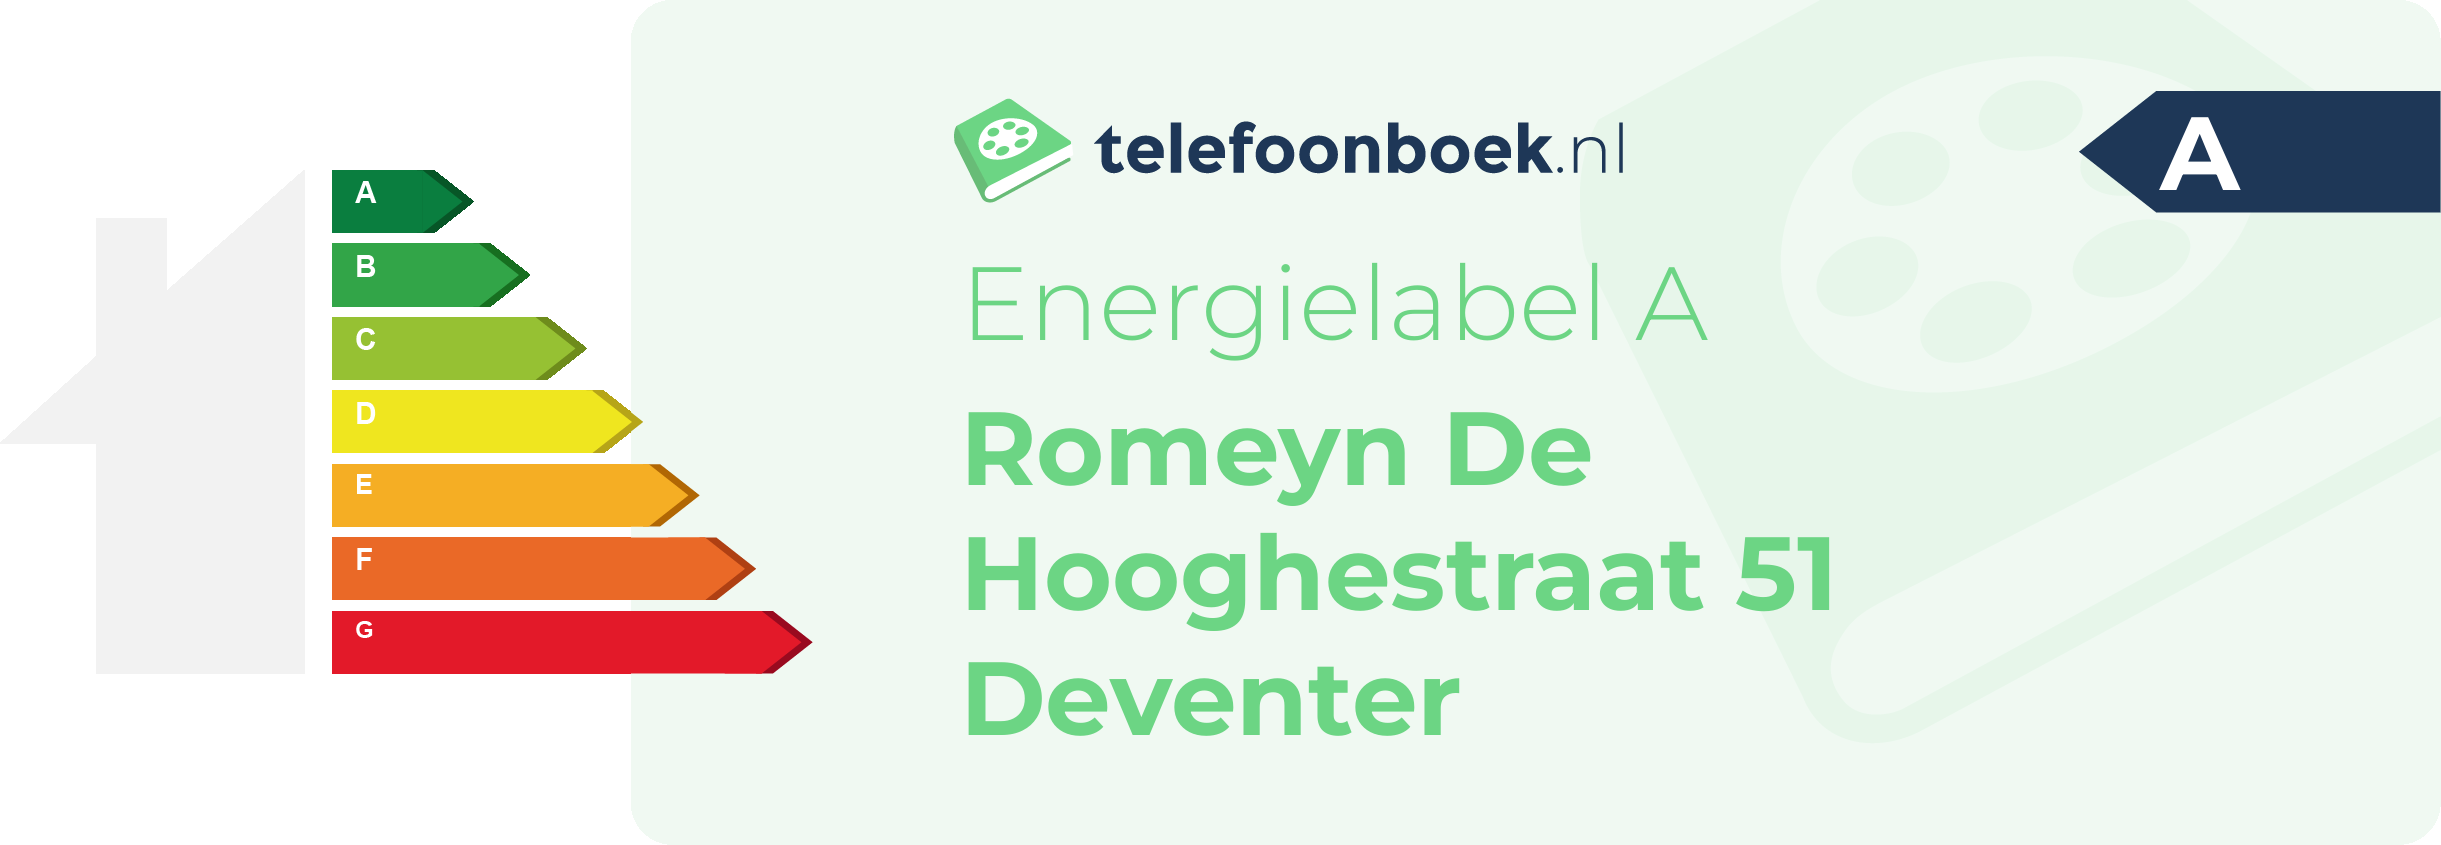 Energielabel Romeyn De Hooghestraat 51 Deventer